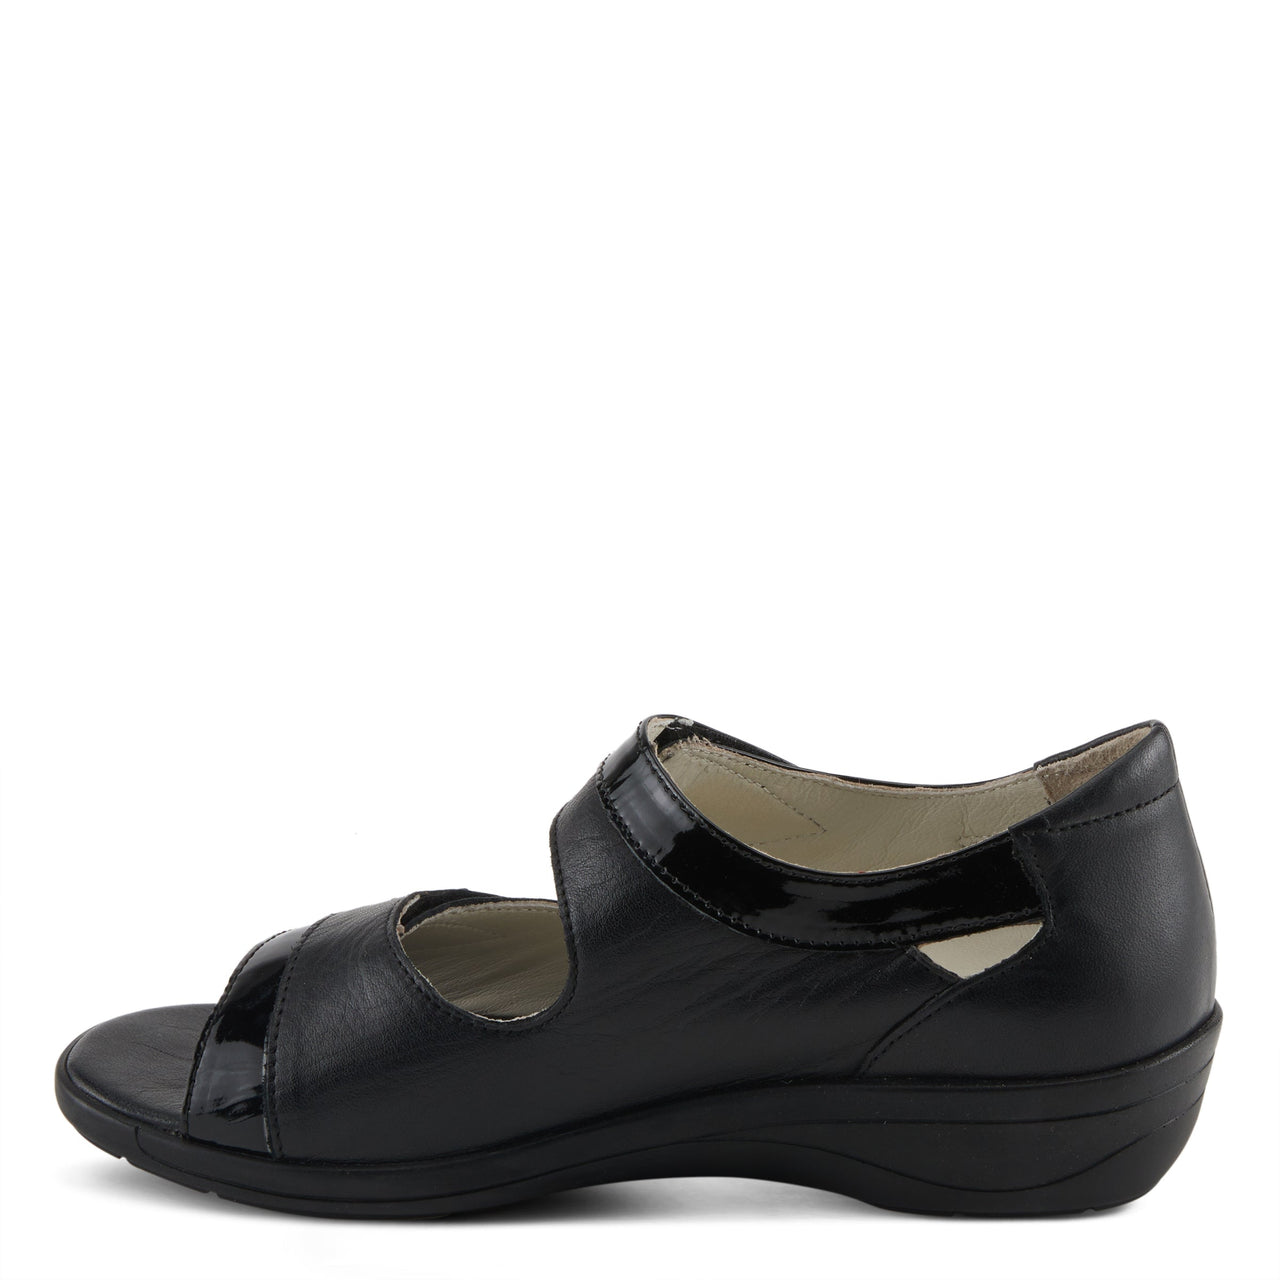 Spring Step Shoes Flexus Jordimarie Sandals